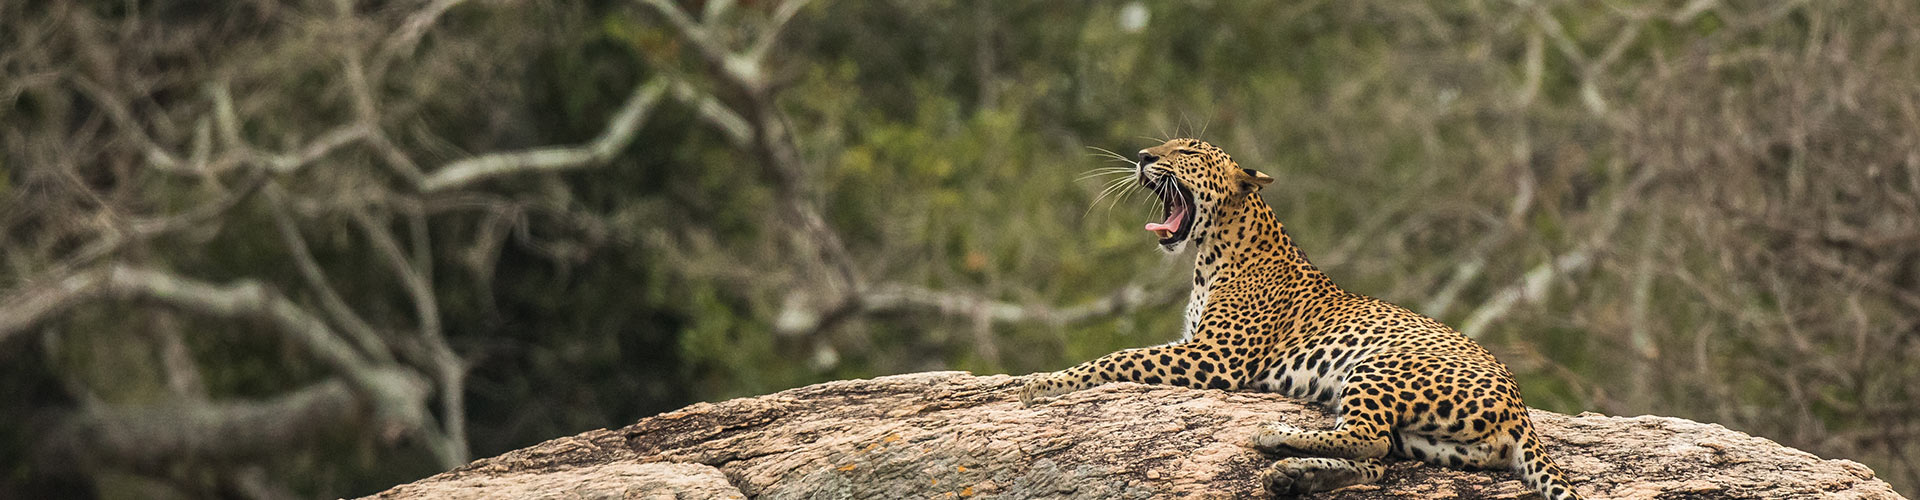 sri lanka wildlife tourism